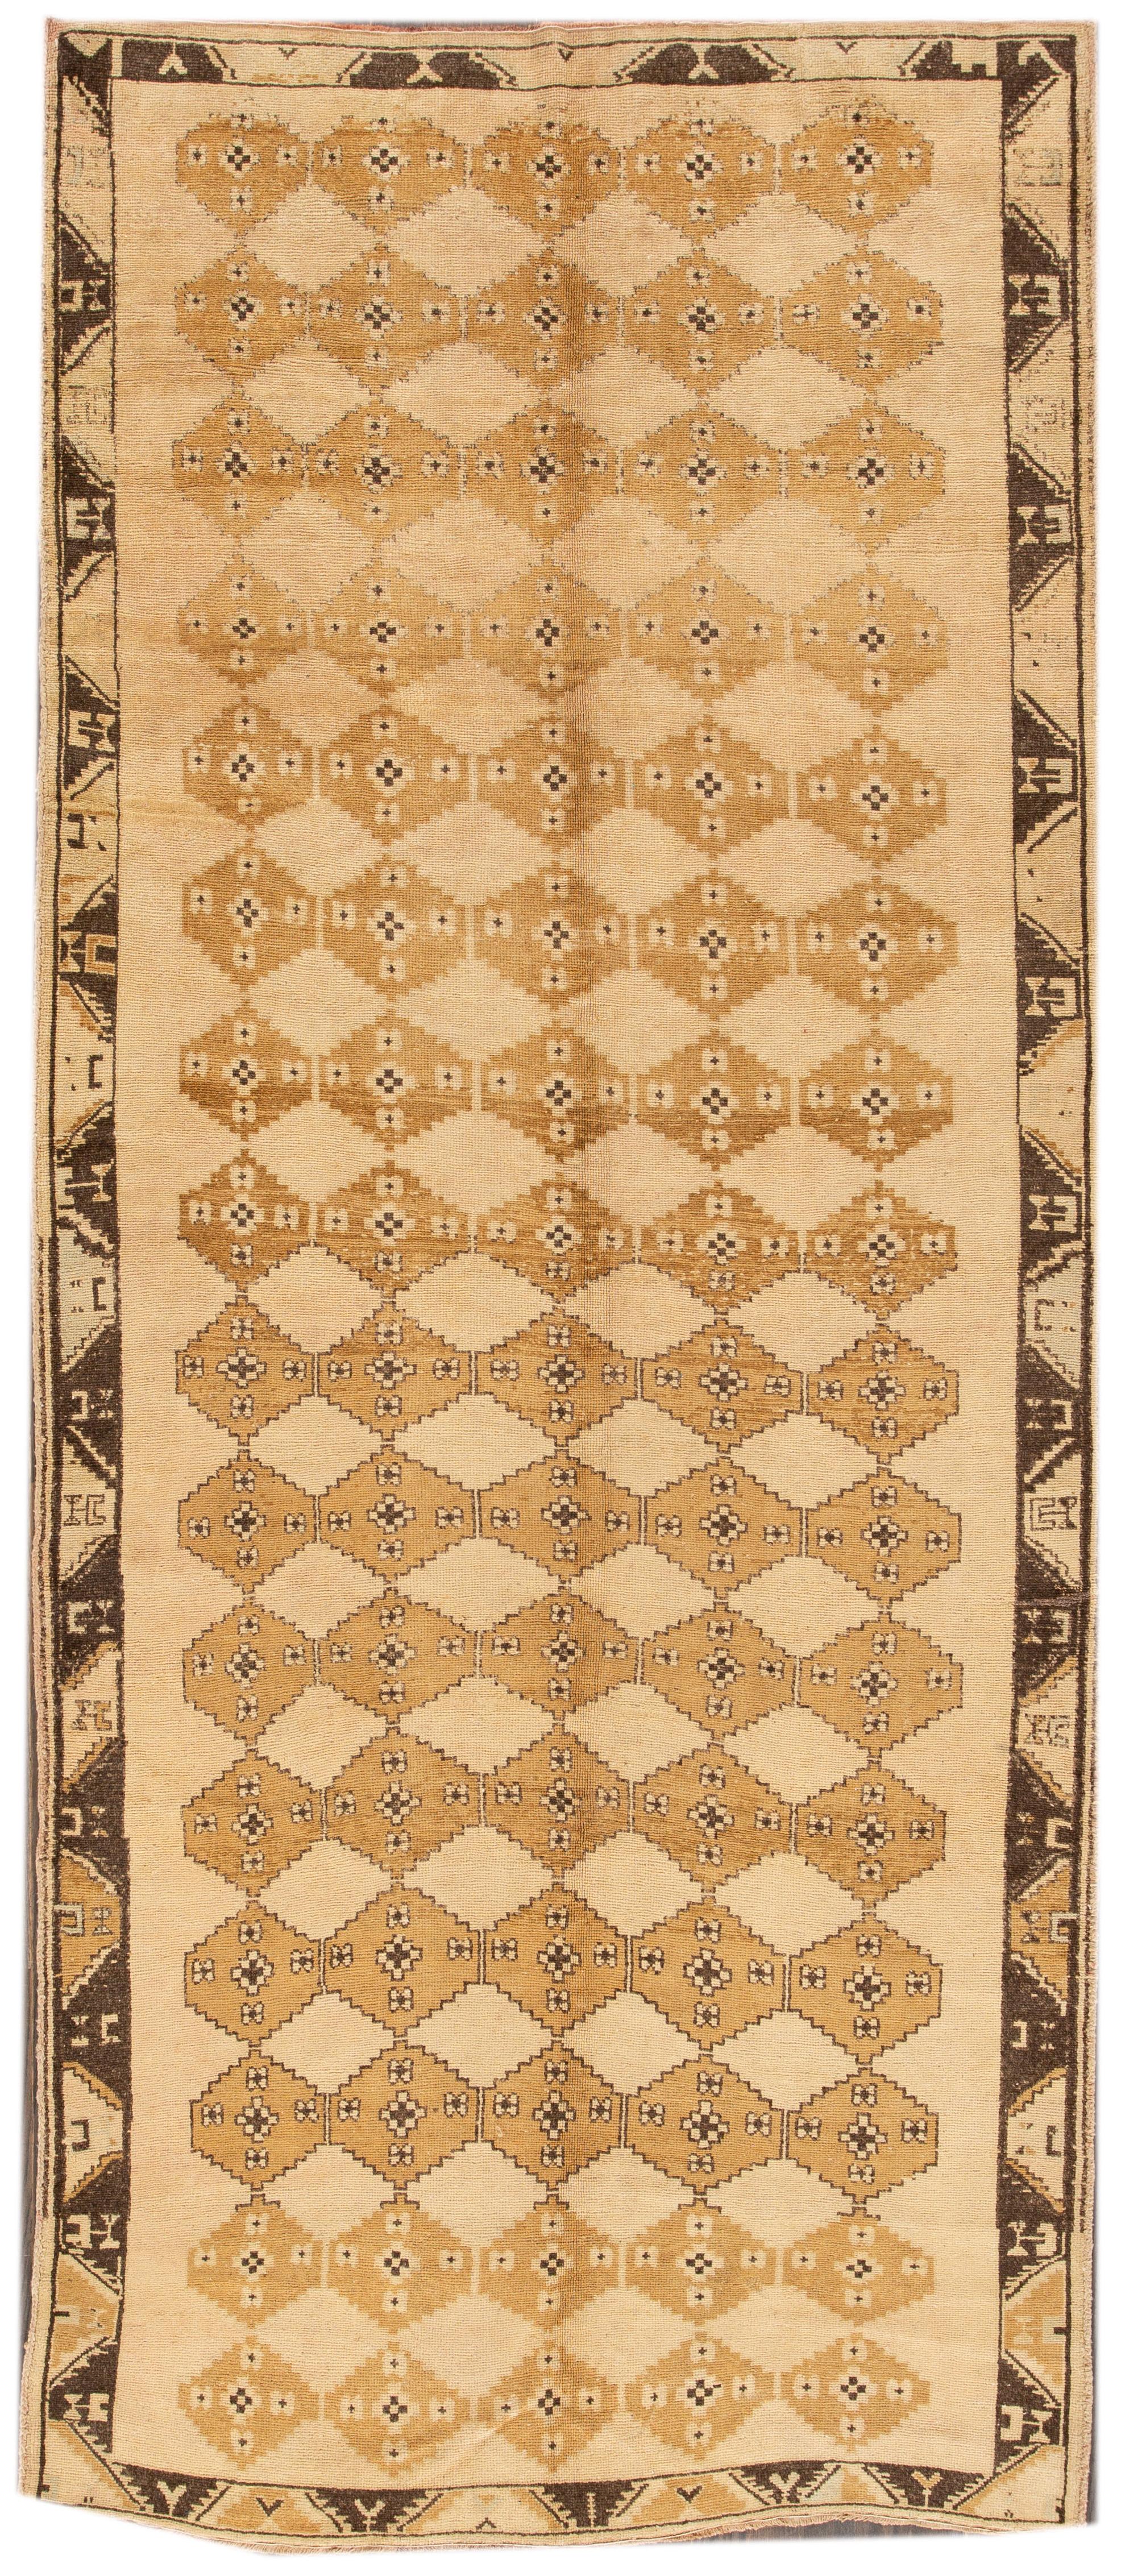 19th-Century Antique Khotan Handmade Geometric Beige Wool Rug For Sale